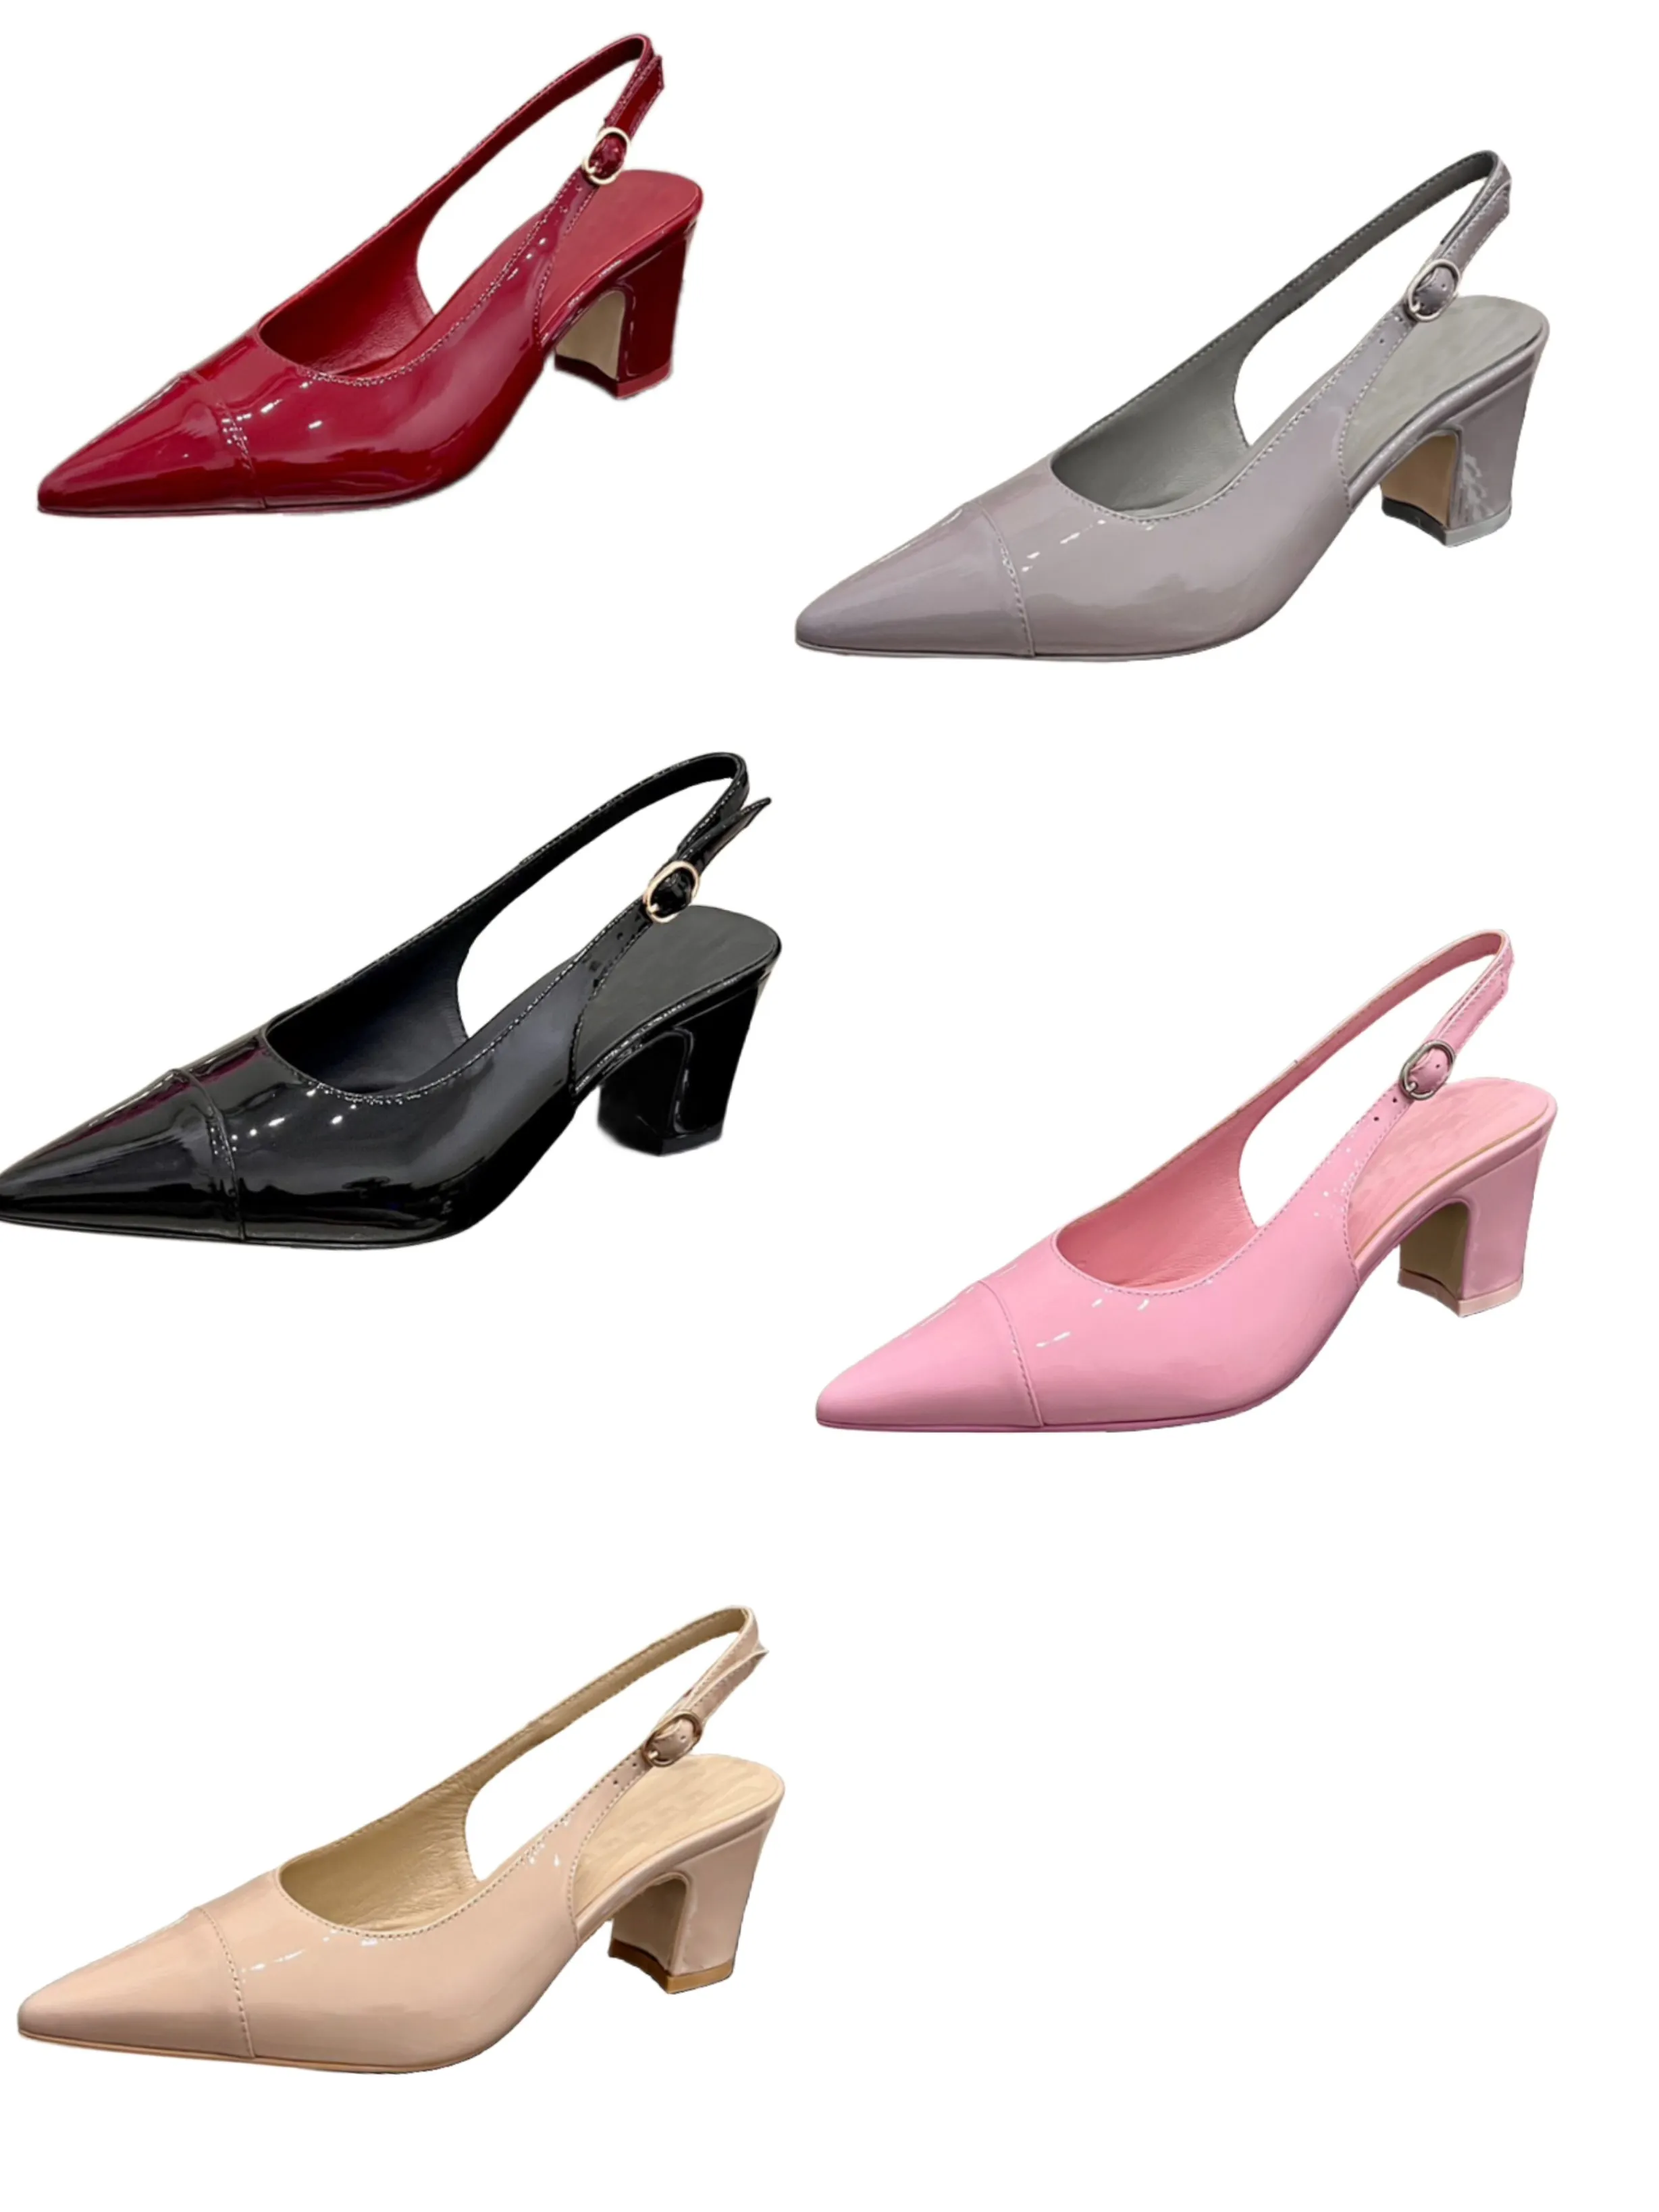 10A الجودة الأصلية للسيدات الساخنة للرجال للرجال High High Heels Flat Shoes Summer Mashion Summer Slippers Sandals Size 35-41 88